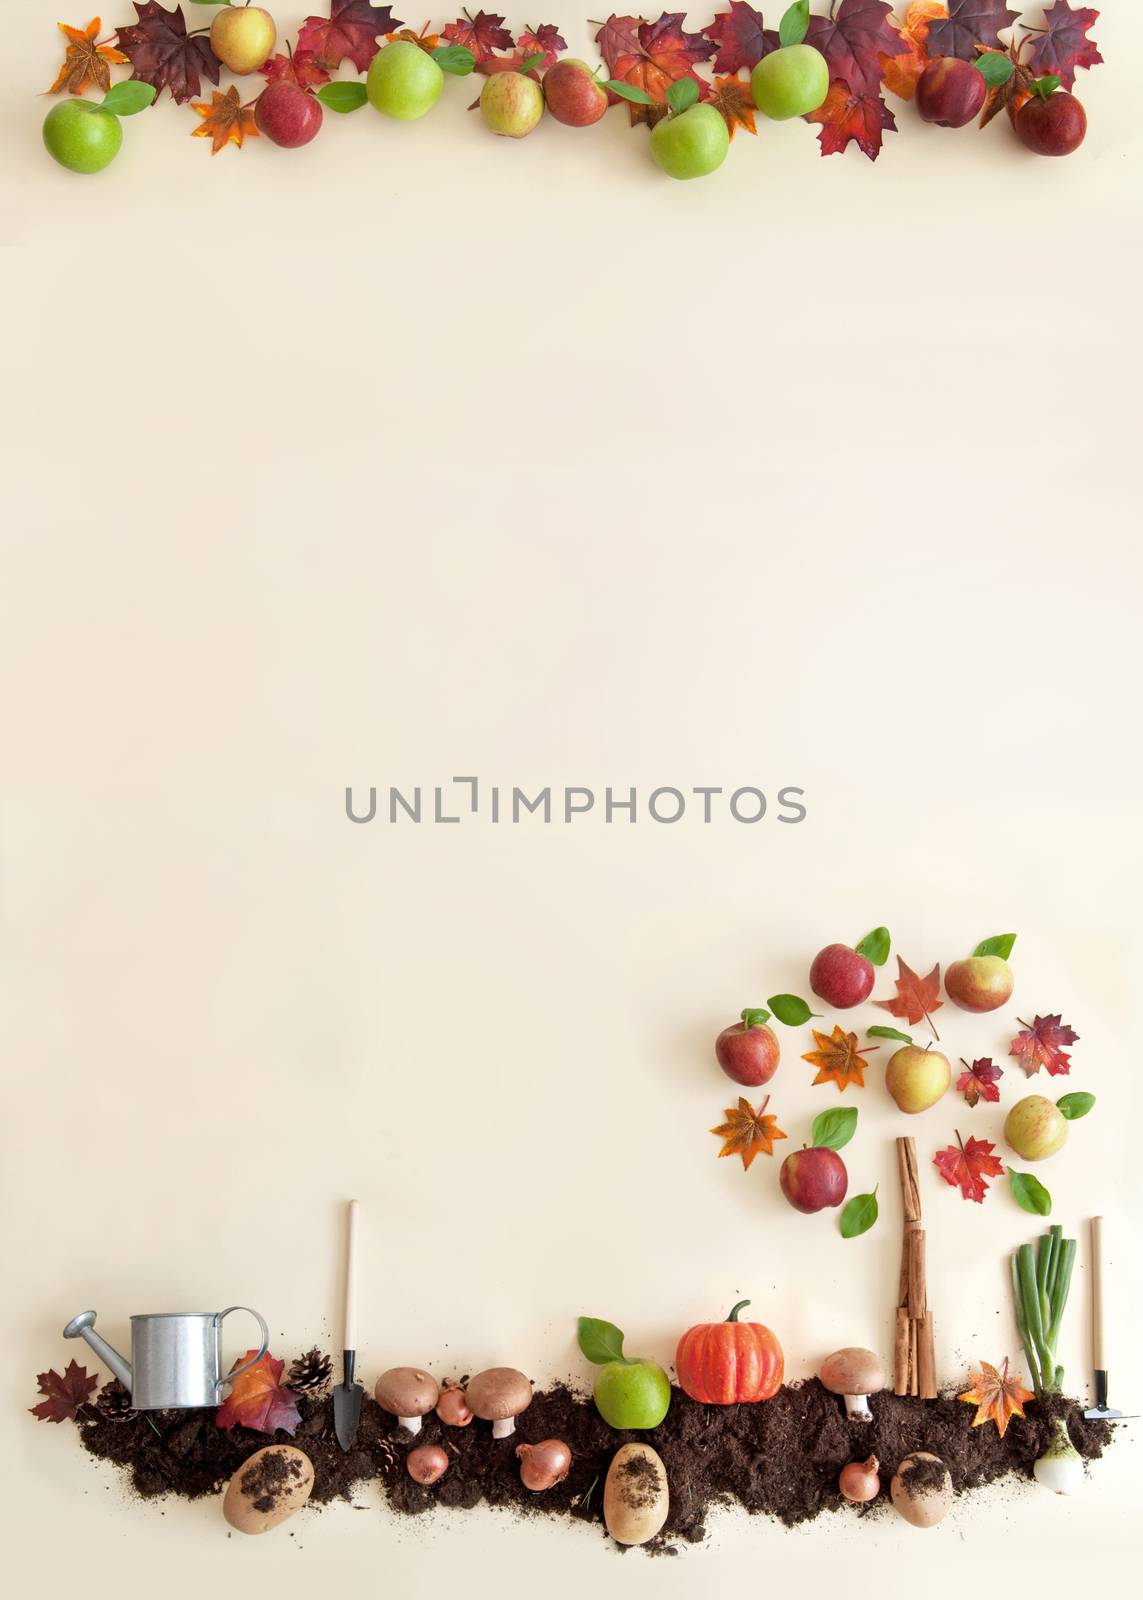 Autumn garden frame by unikpix